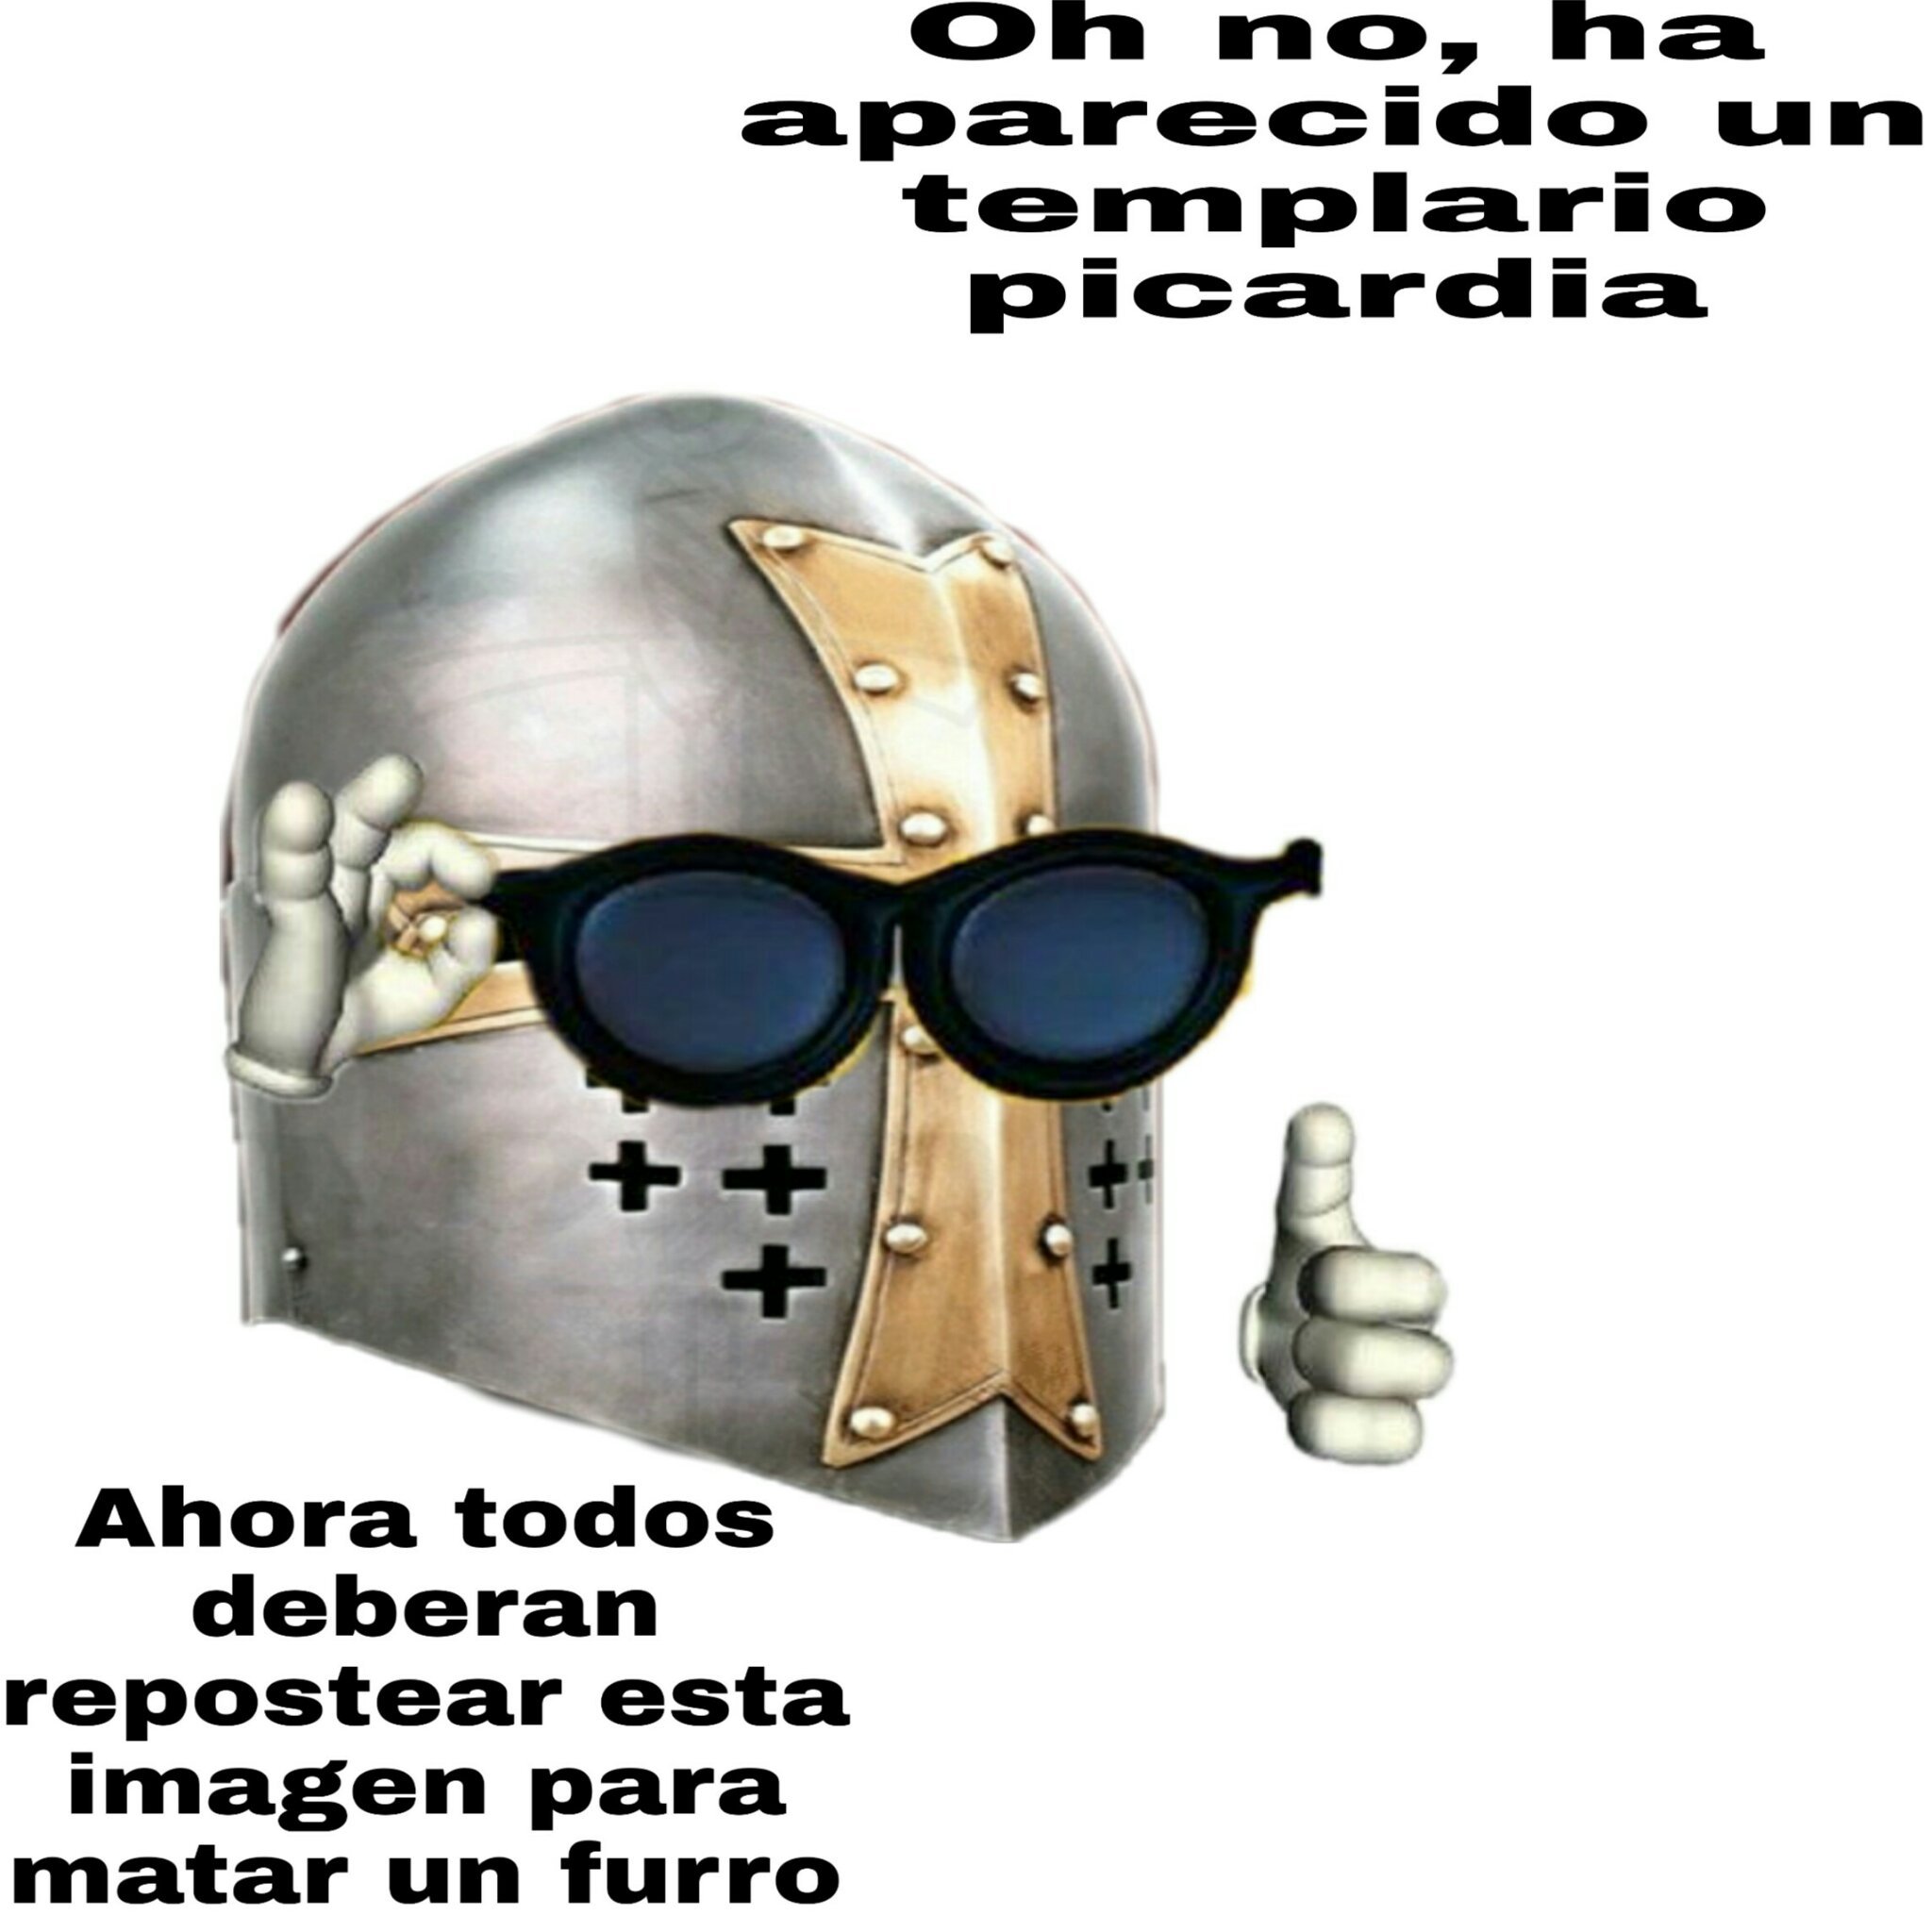 Epicardo - meme